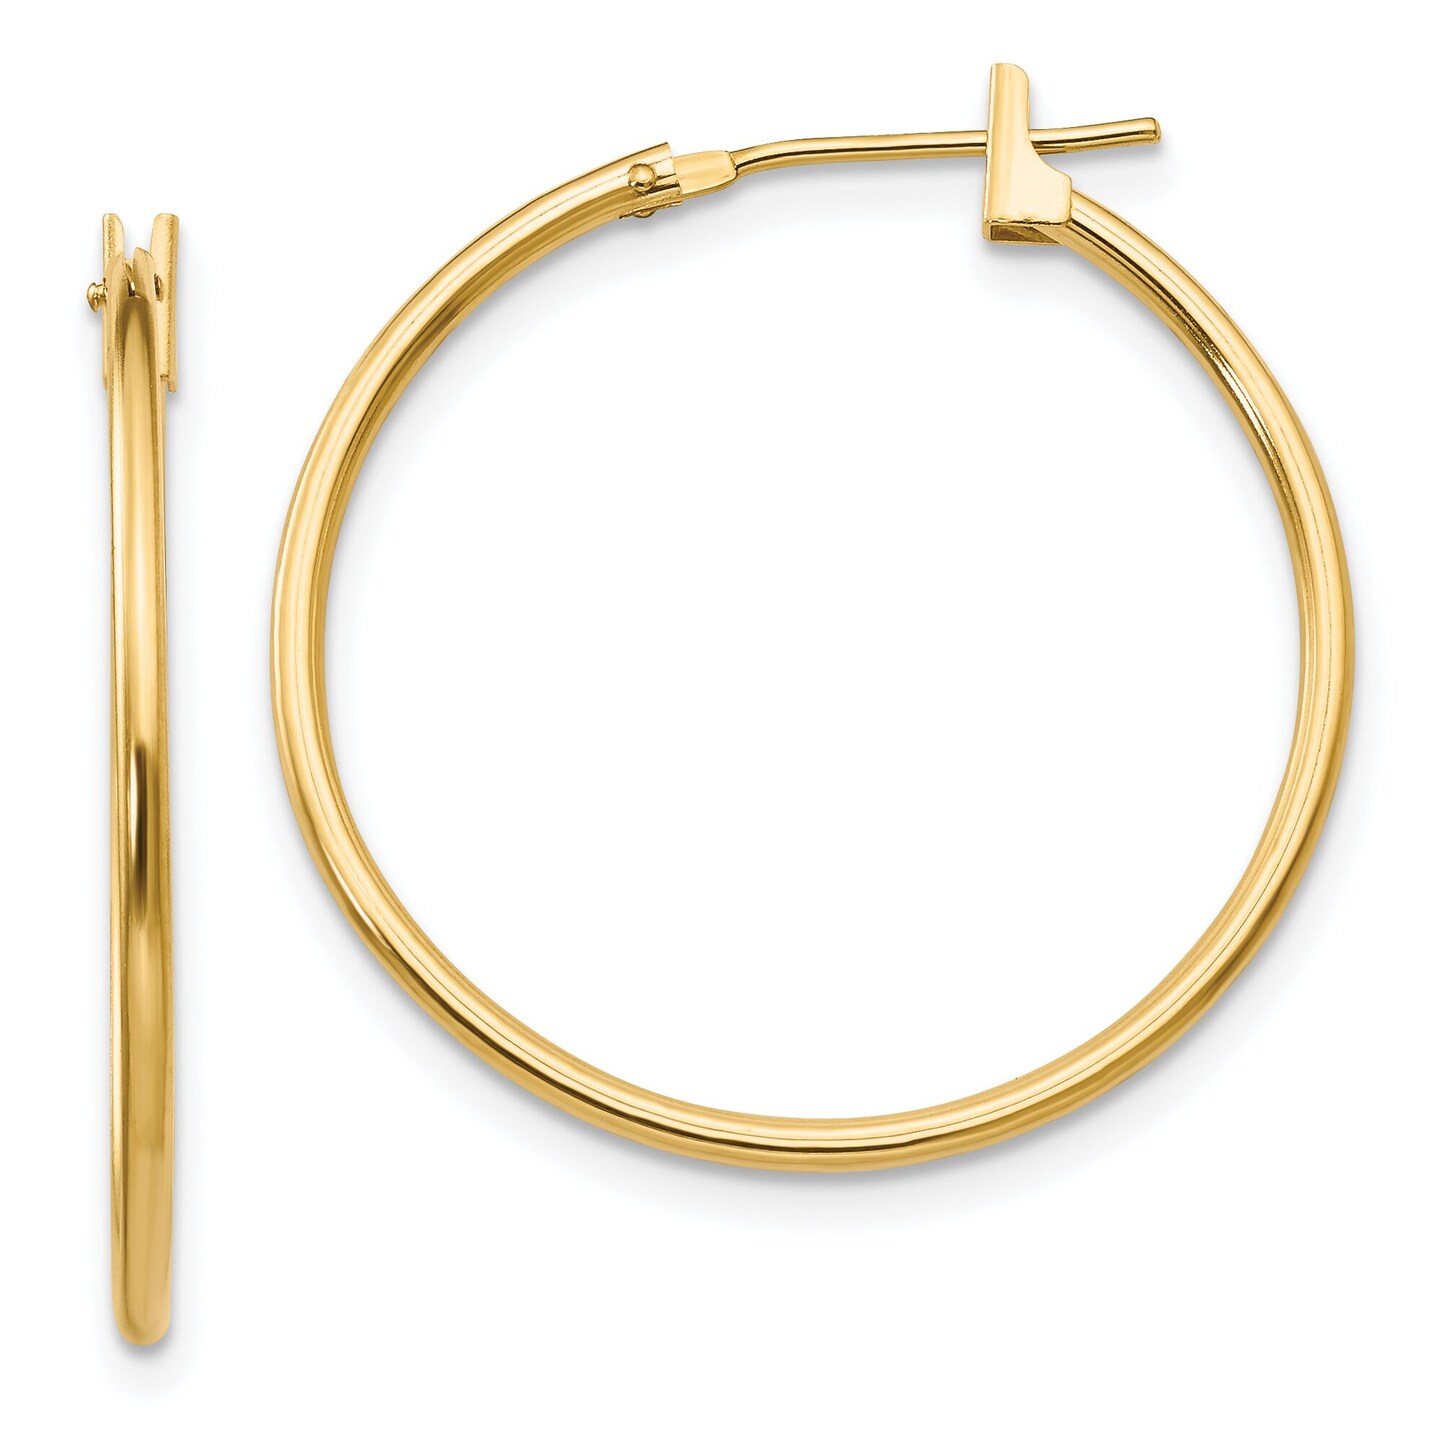 14K Yellow Gold Hoop Earrings Polished Jewelry 25mm x 25mm